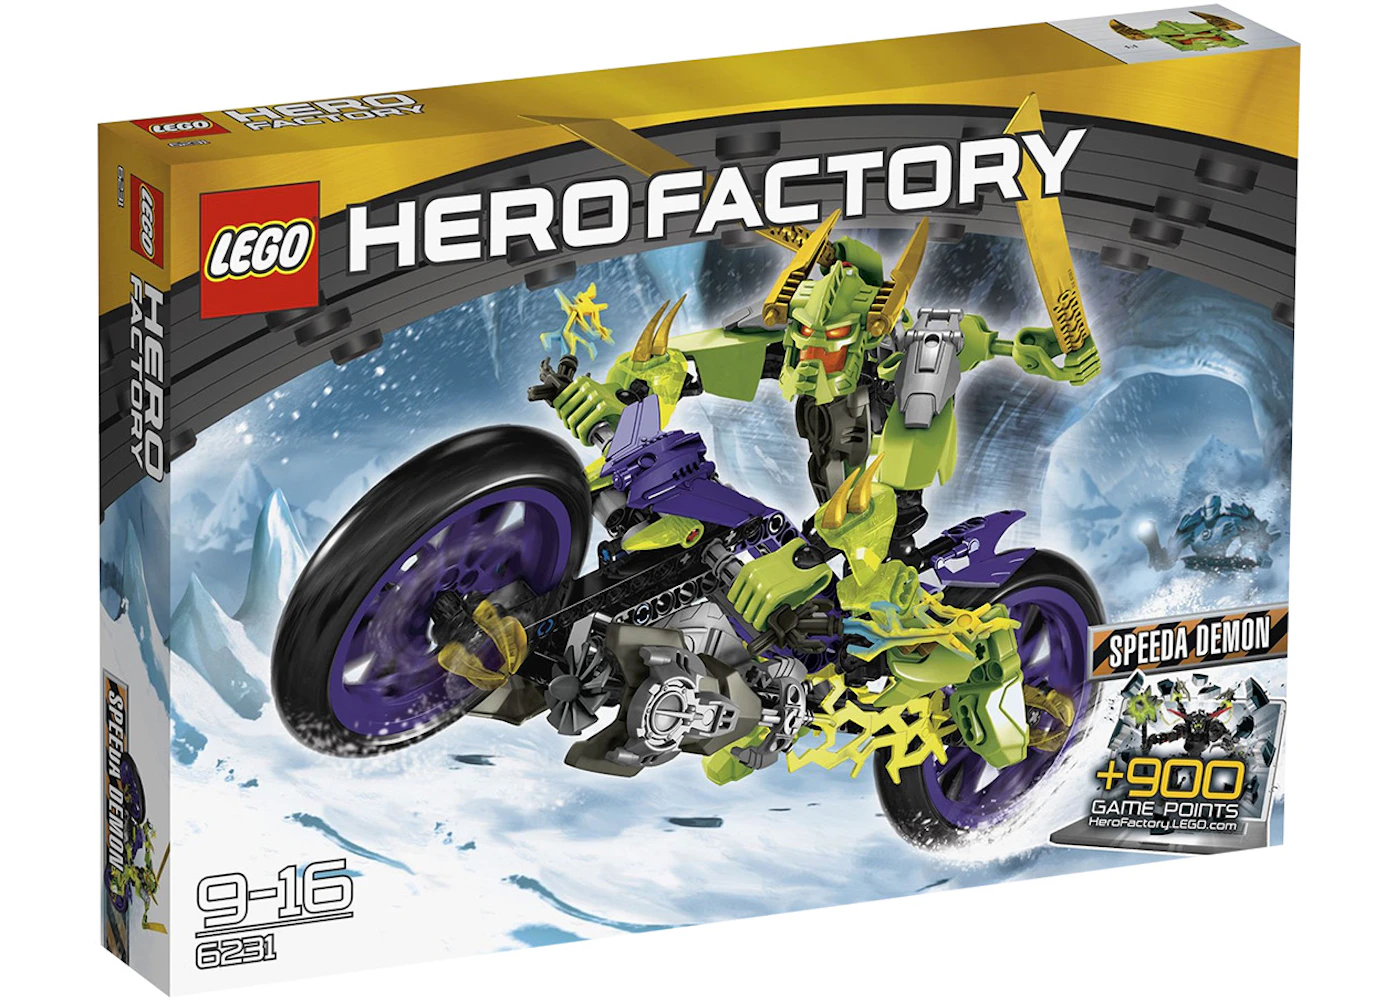 LEGO HERO Factory SPEEDA DEMON 6231 - US